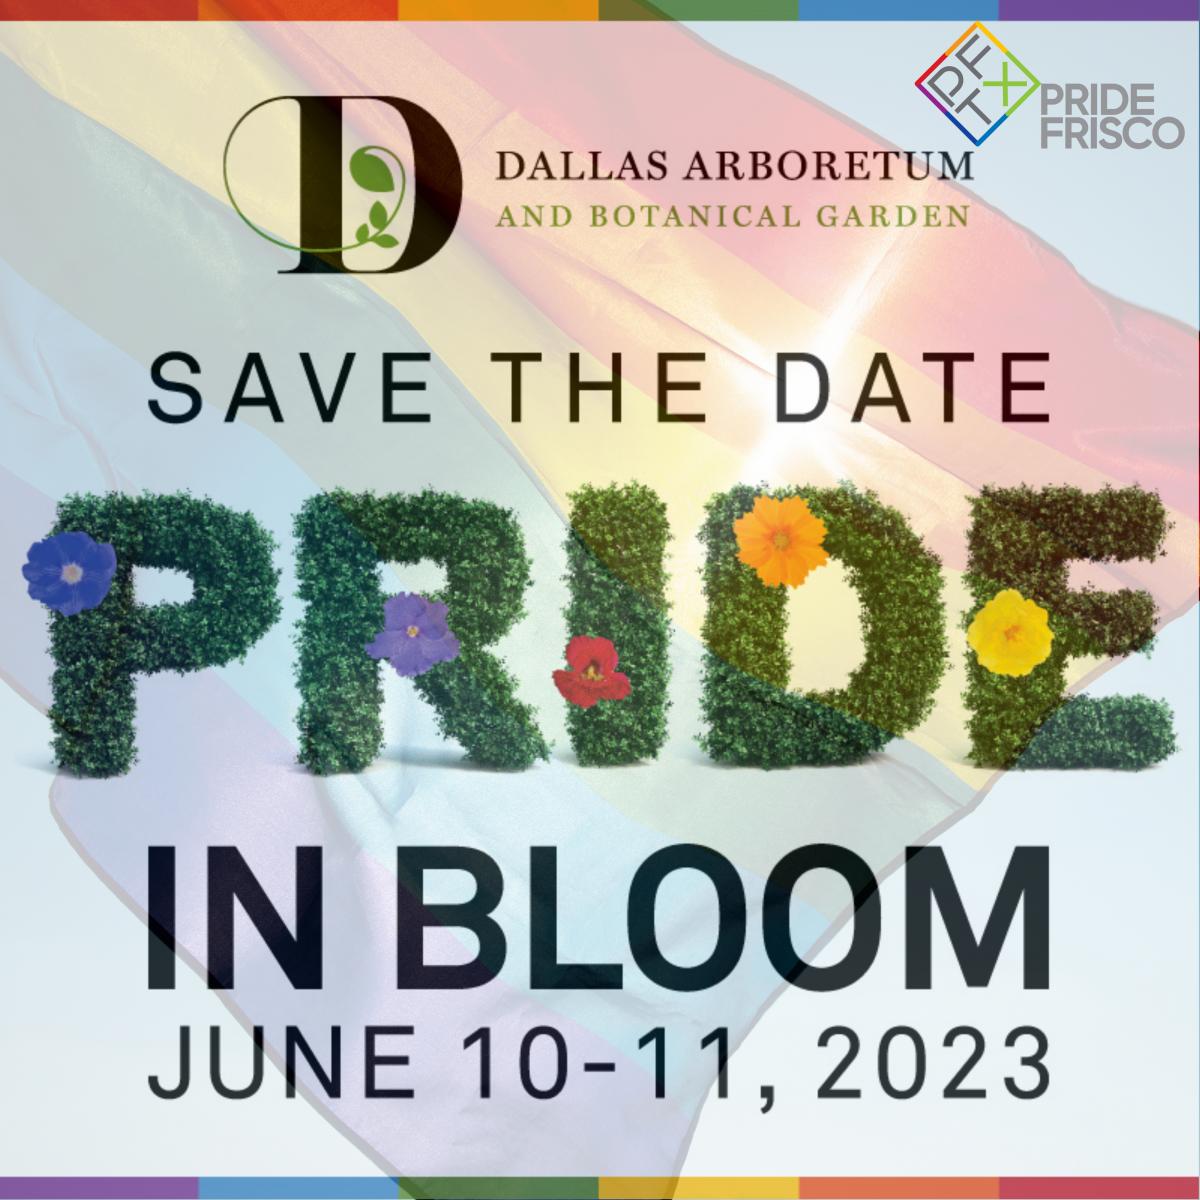 Pride Frisco @ Pride in Bloom cover image